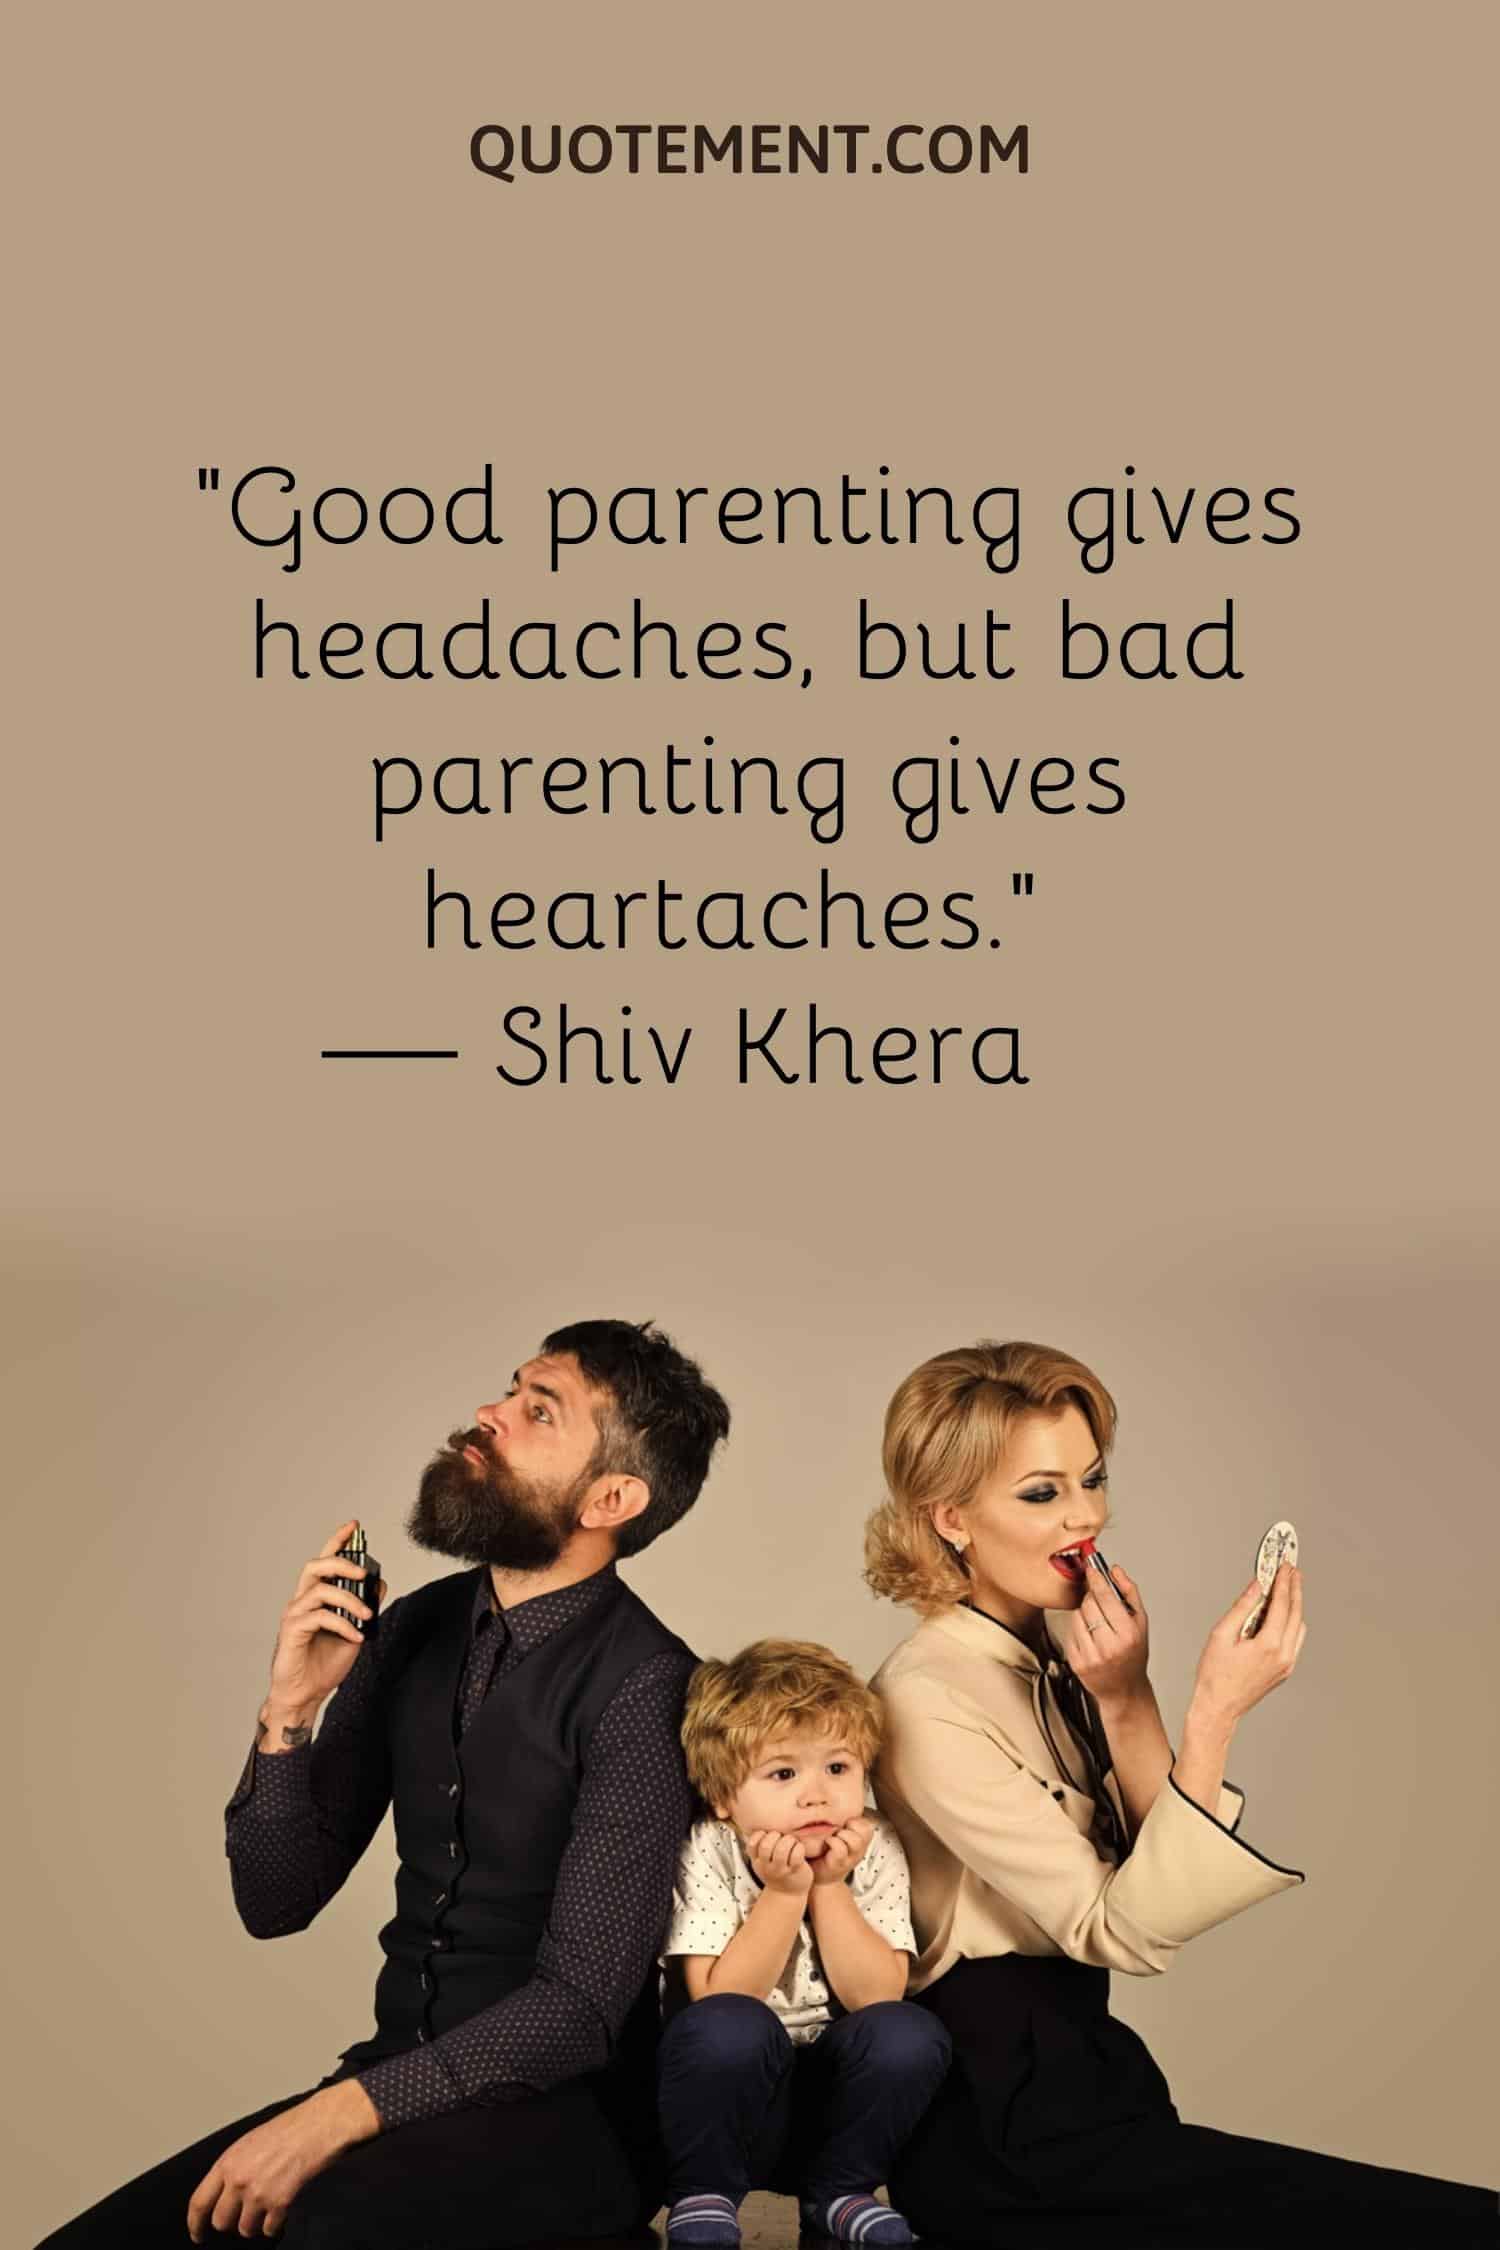 Good parenting gives headaches